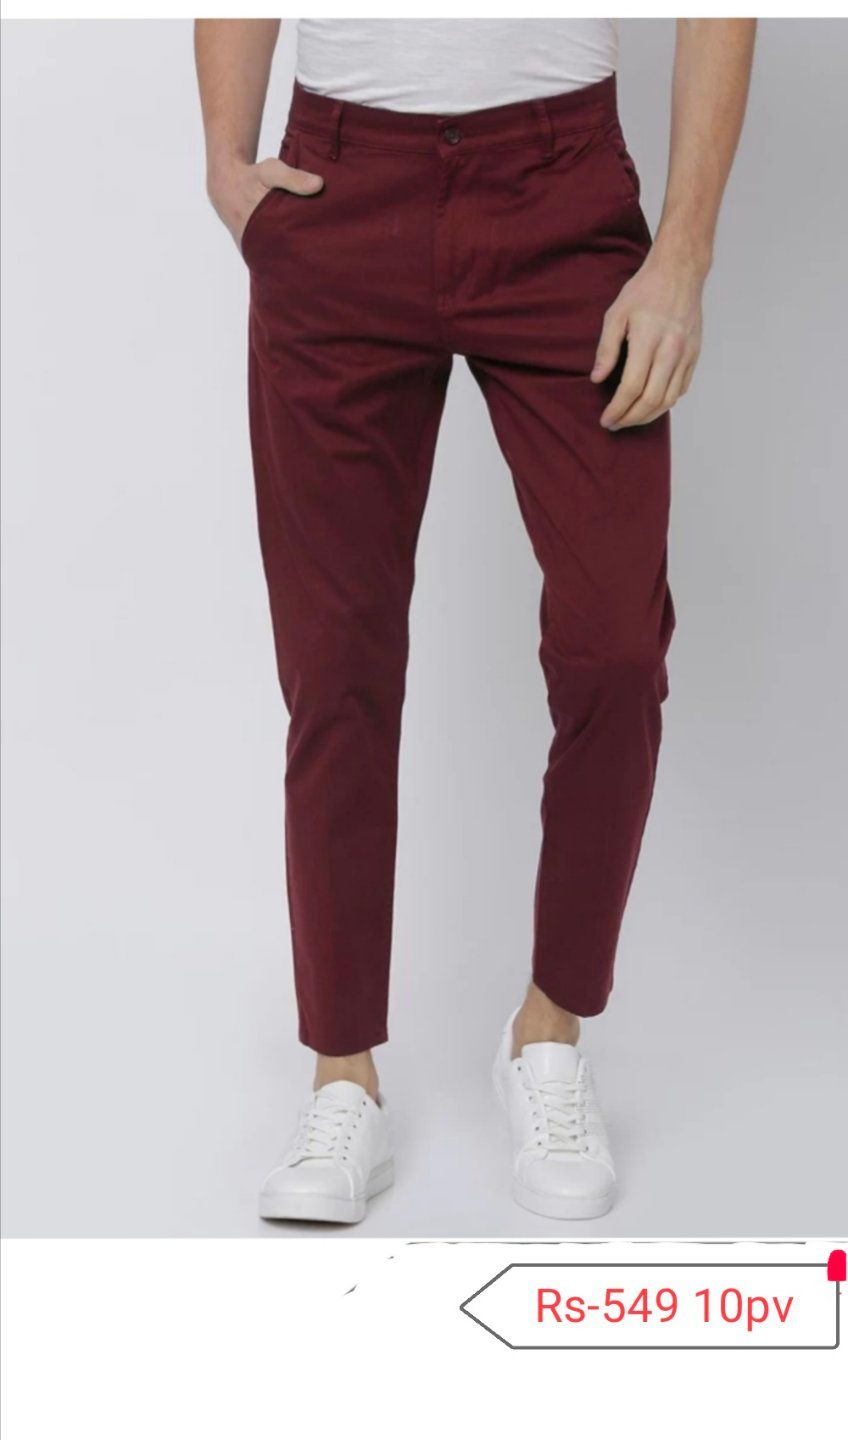 Zara Man jeans men's 32 x 31 to Grey slim straight lightweight cotton pants  | eBay